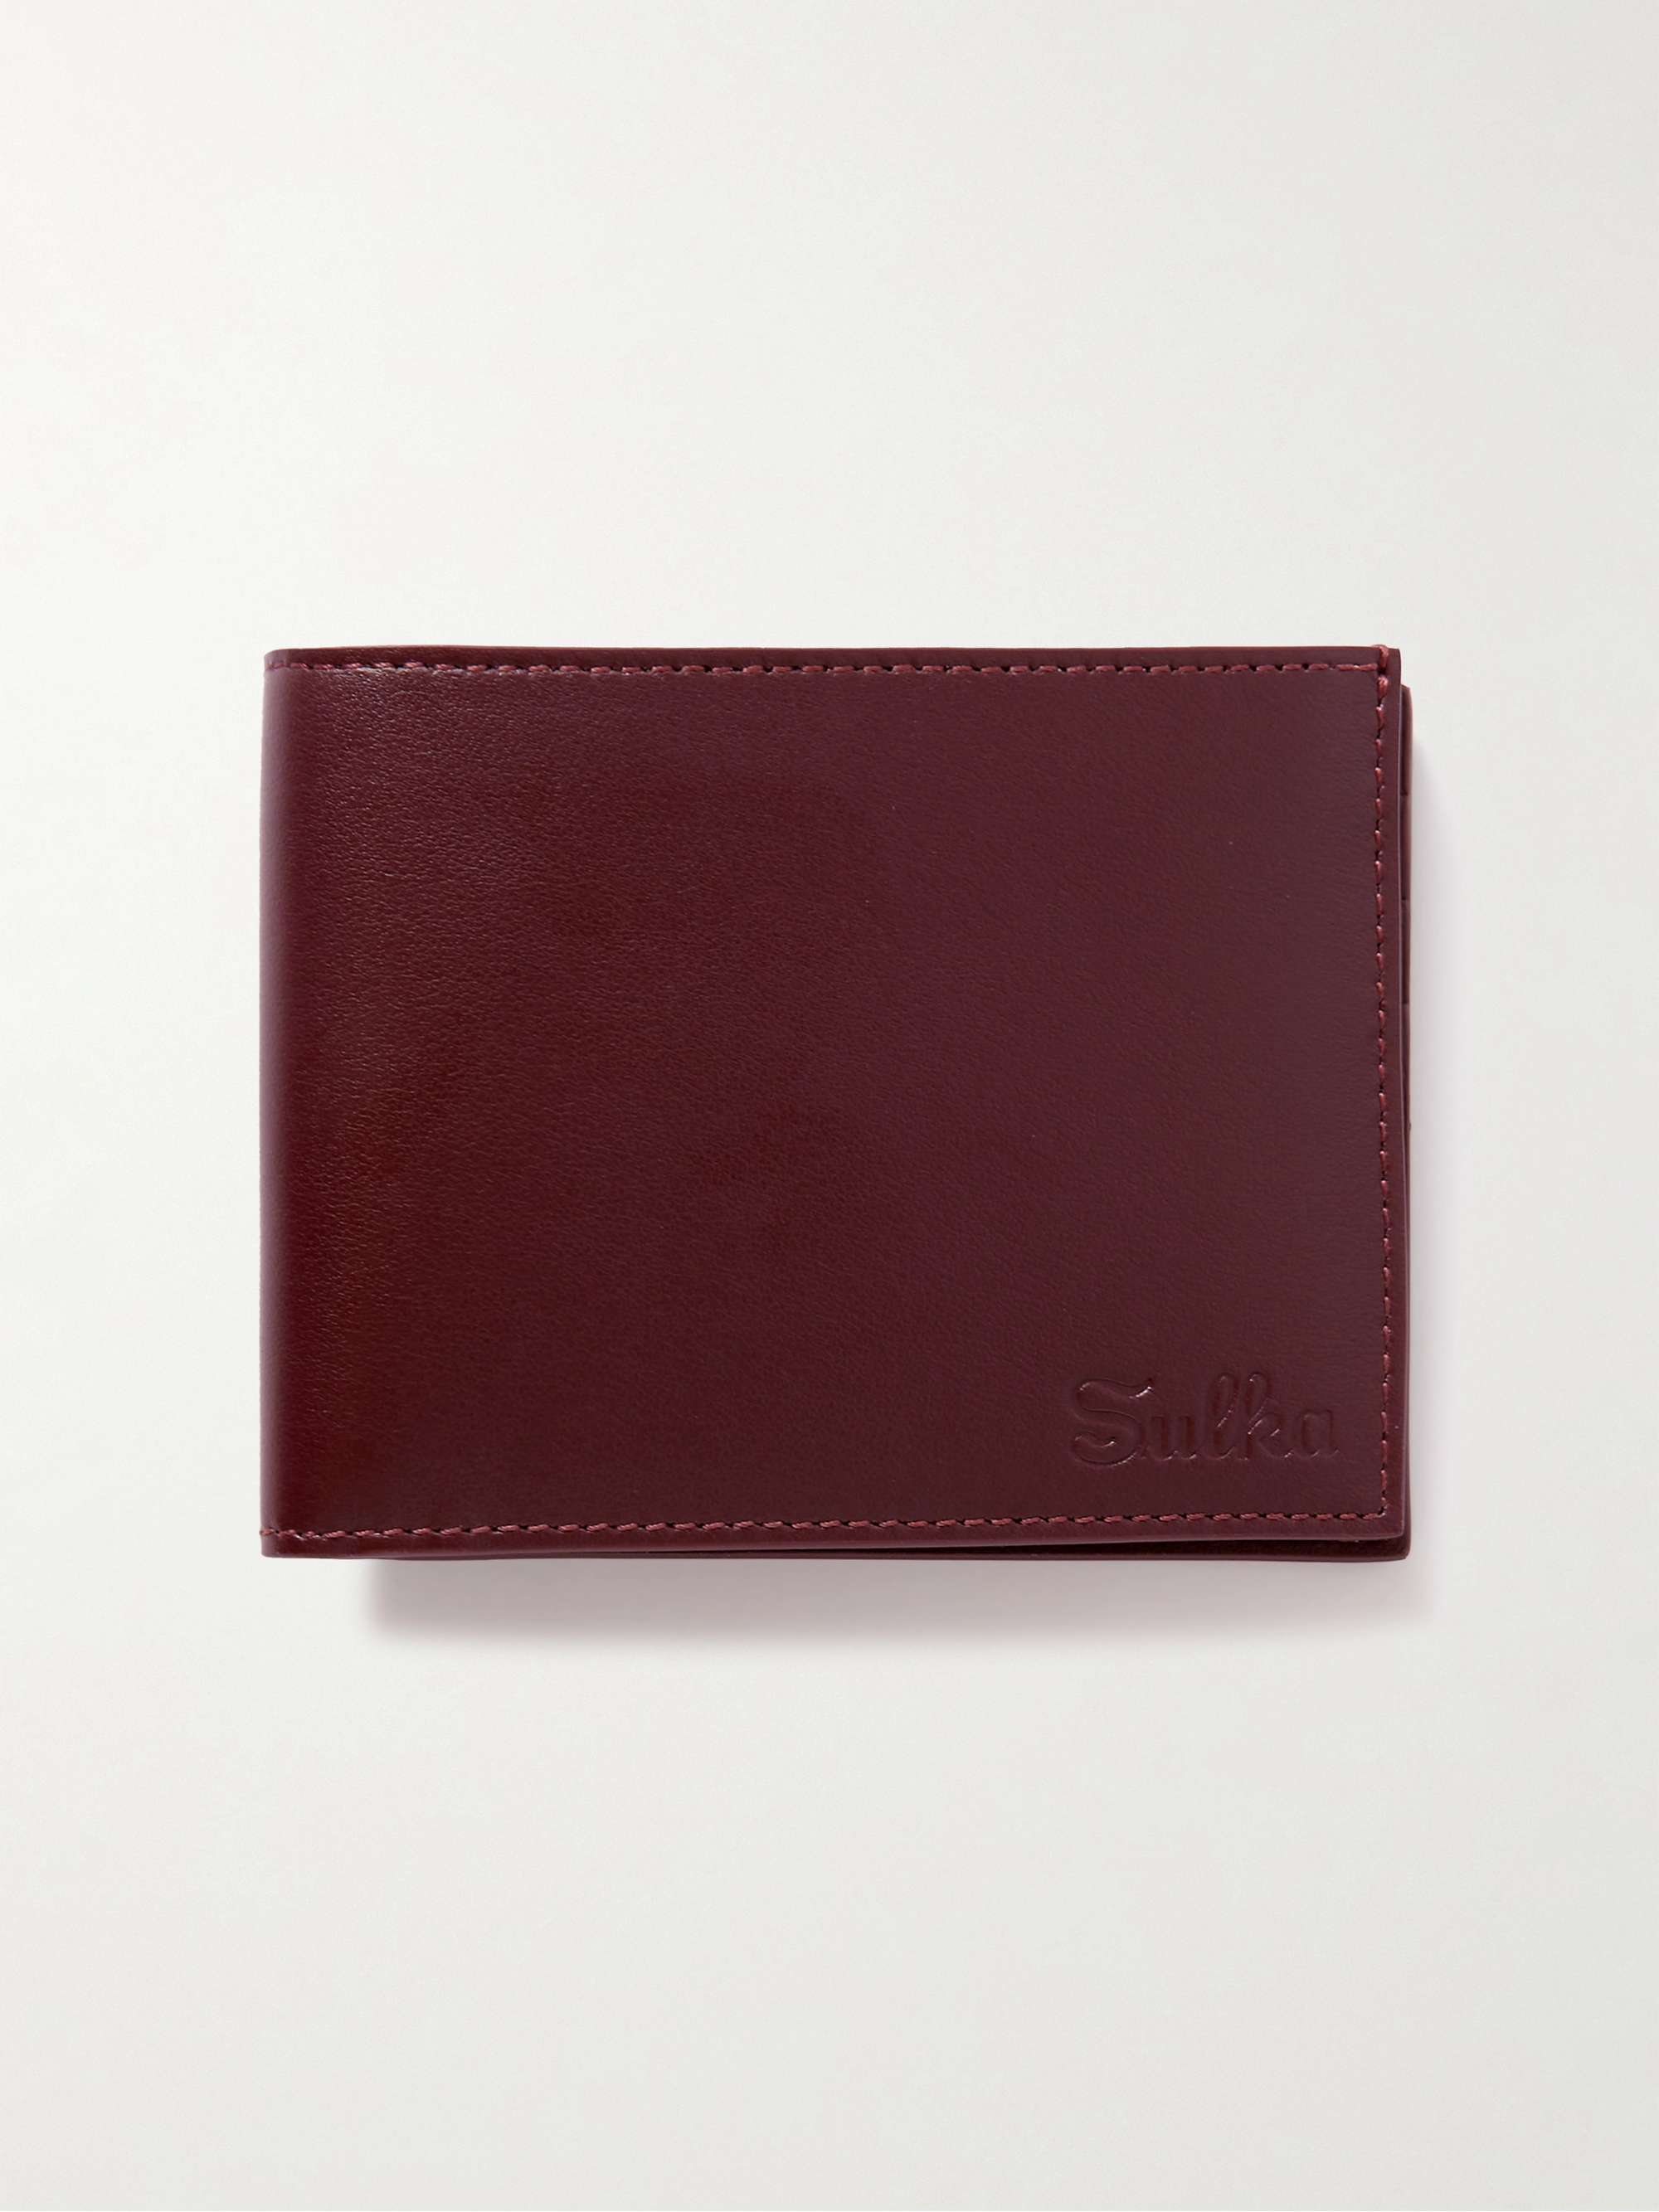 SULKA Logo-Debossed Leather Billfold Wallet